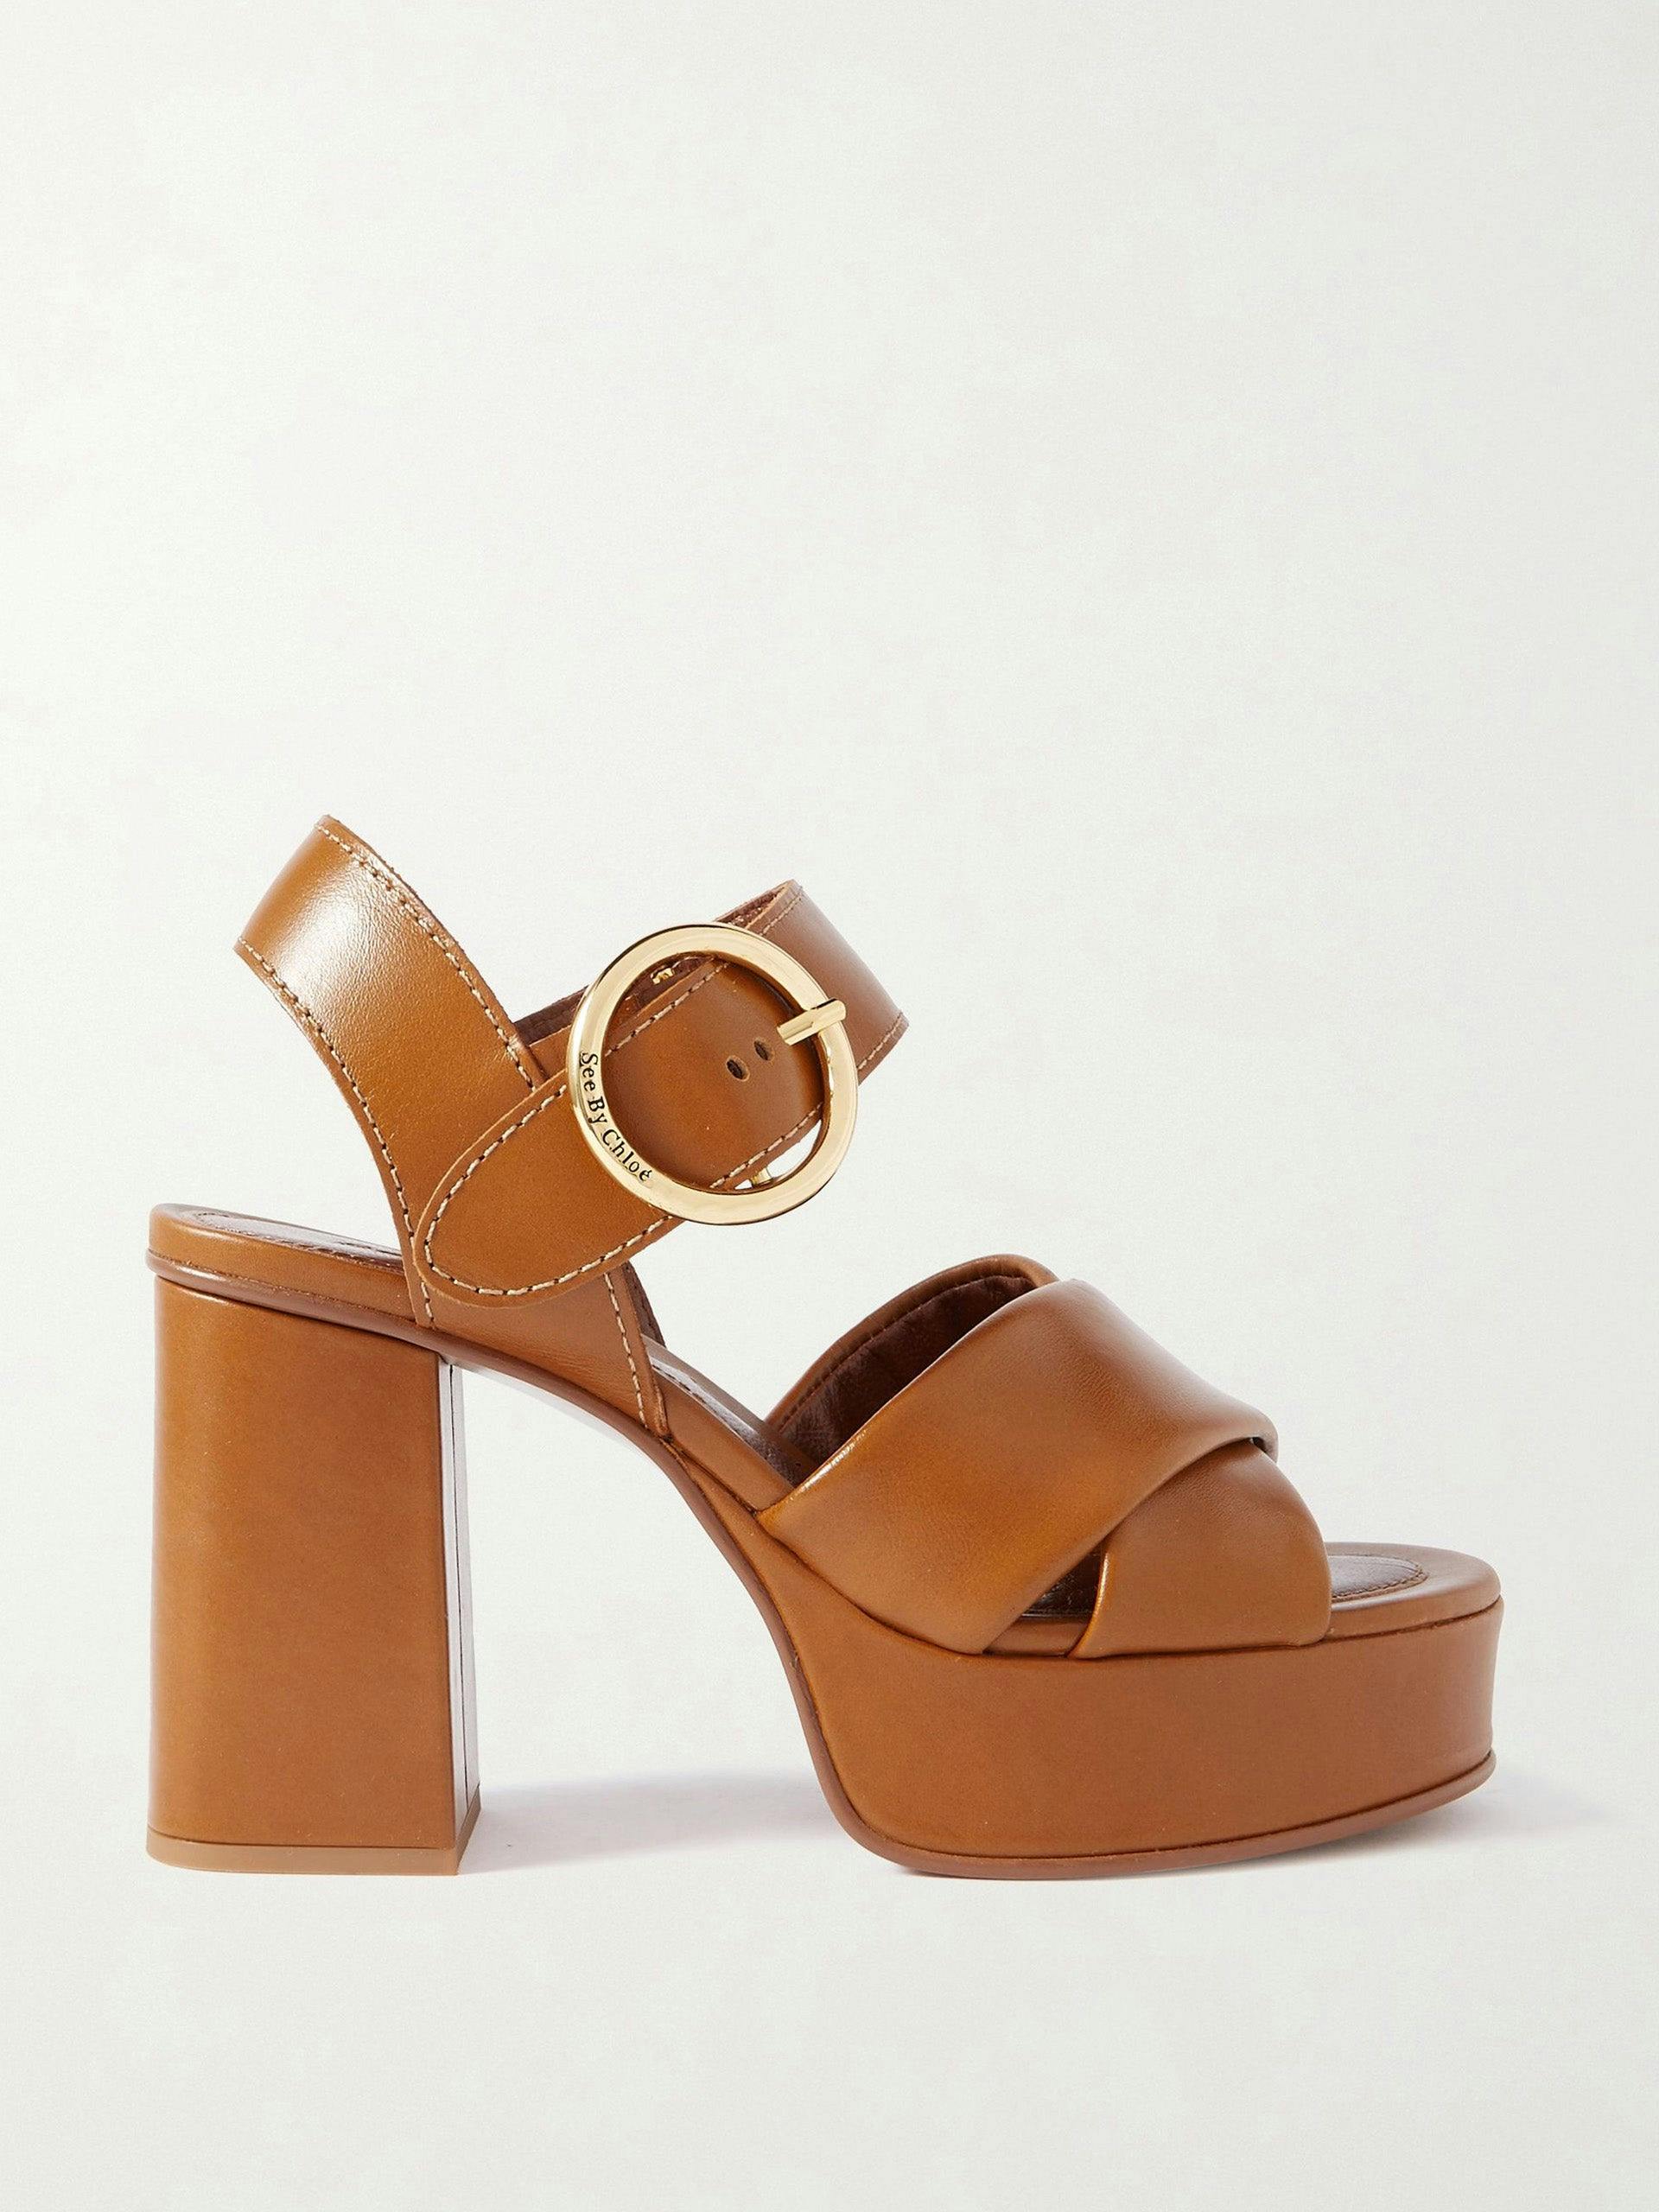 Tan leather platform sandals